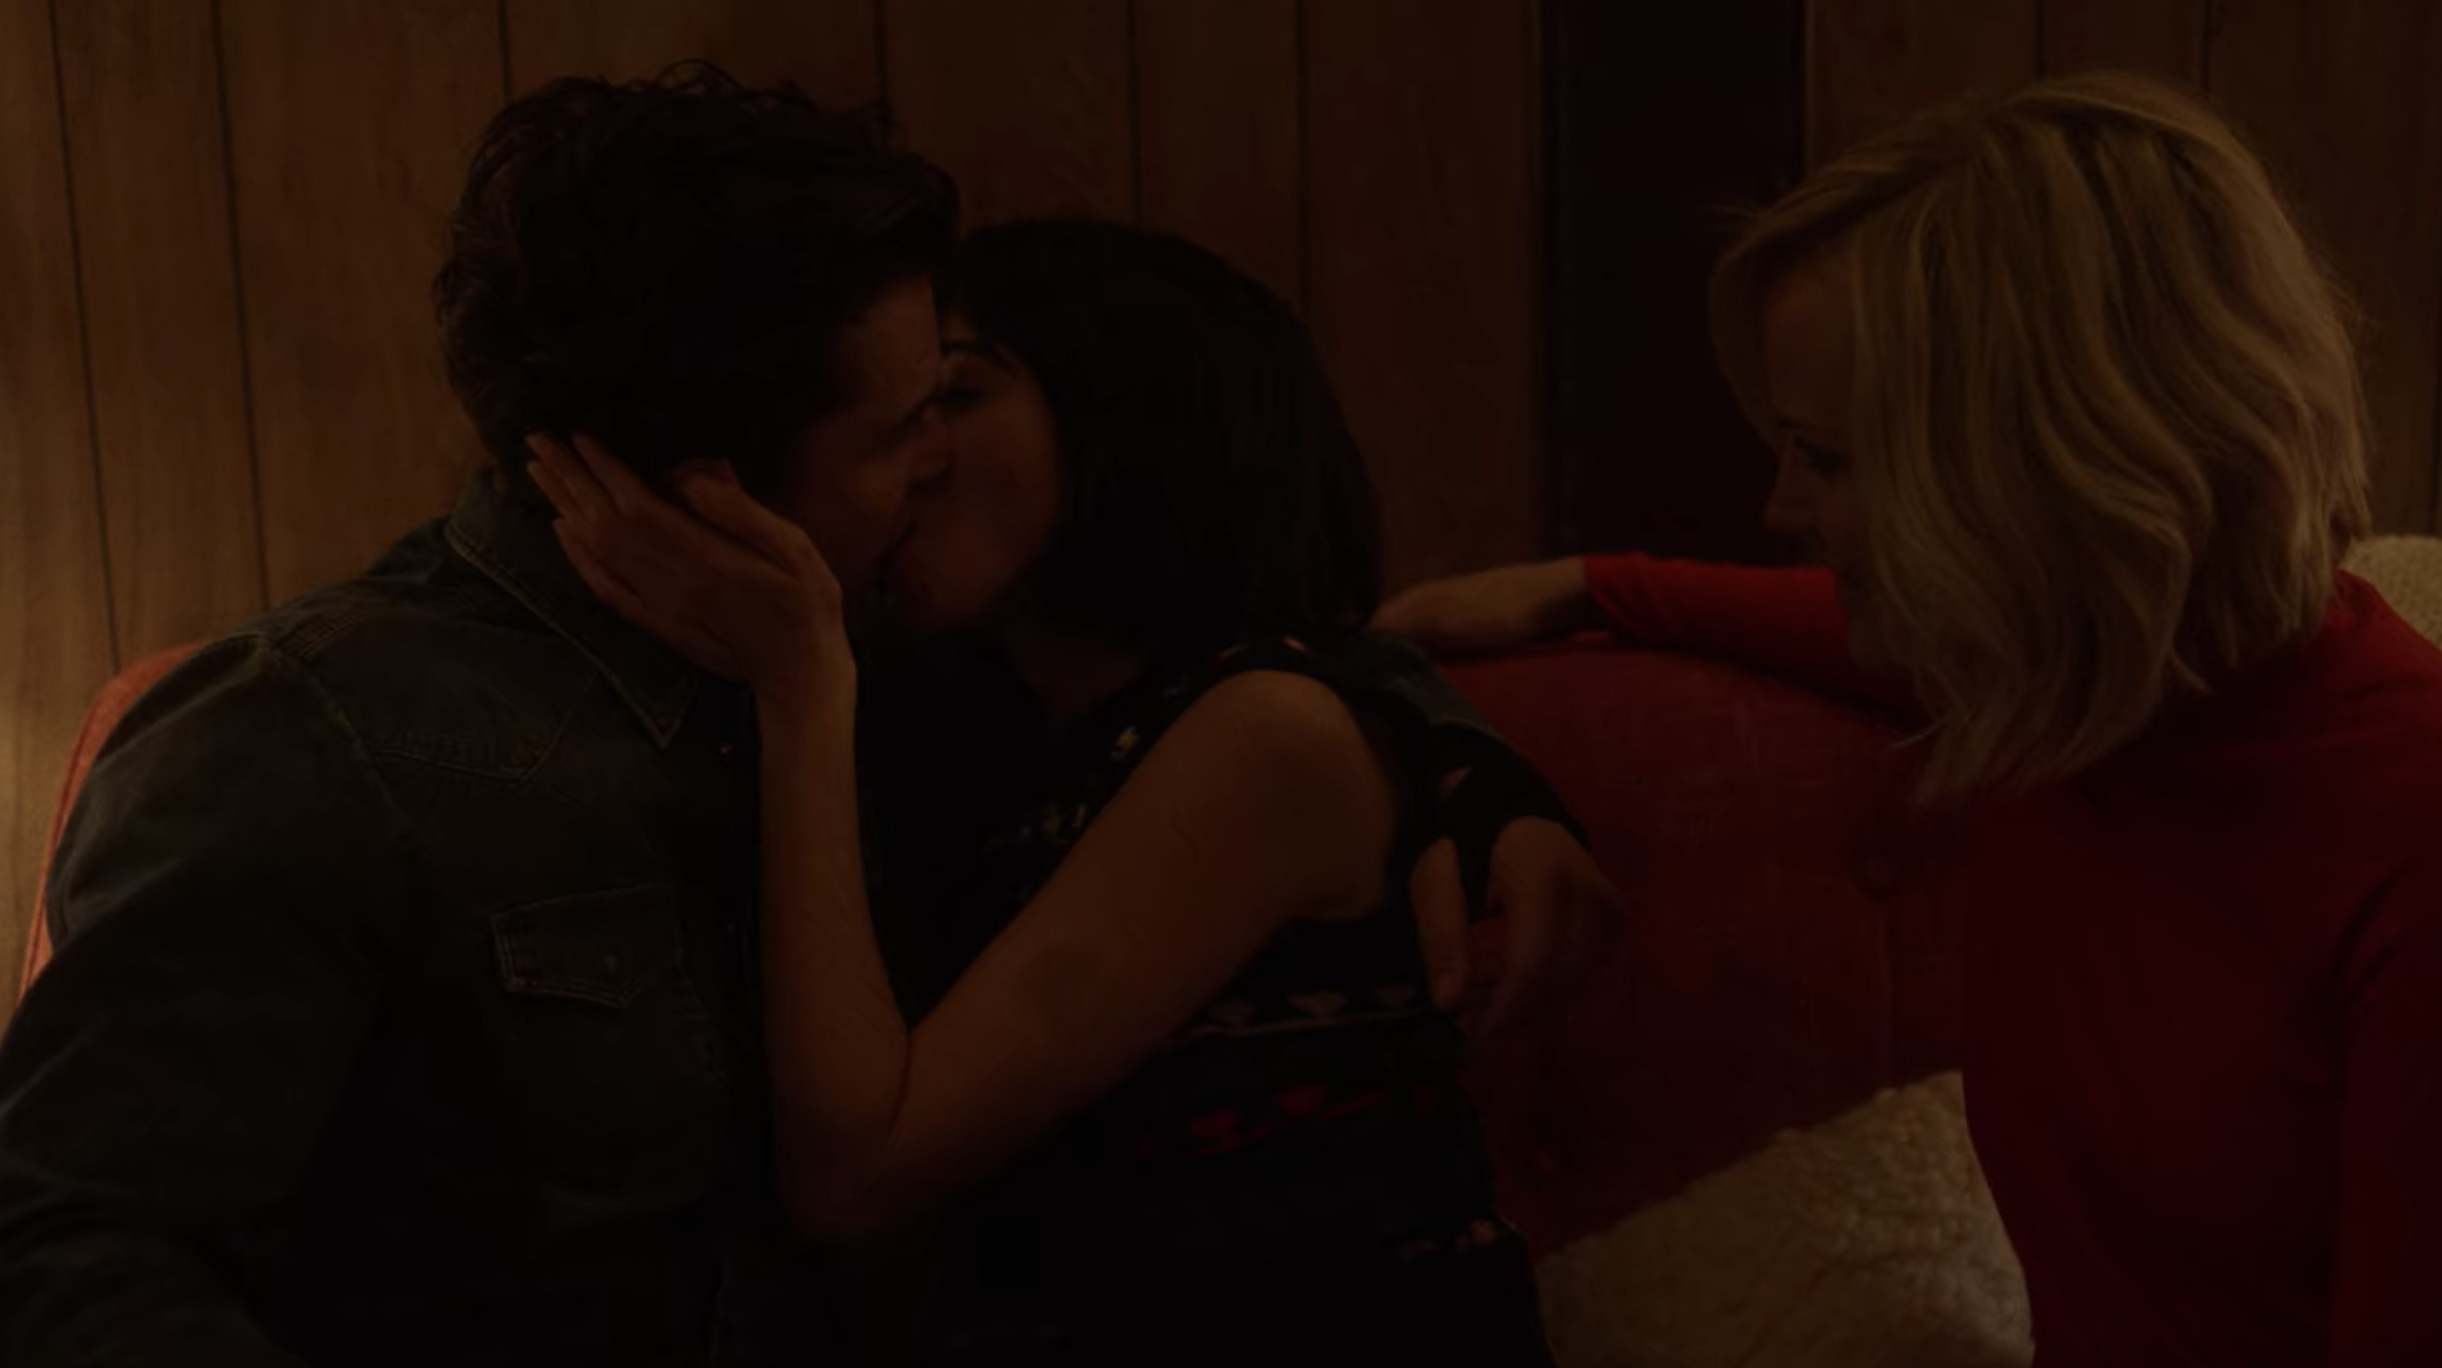 Amazing pornstar in horny threesome, lesbian sex scene